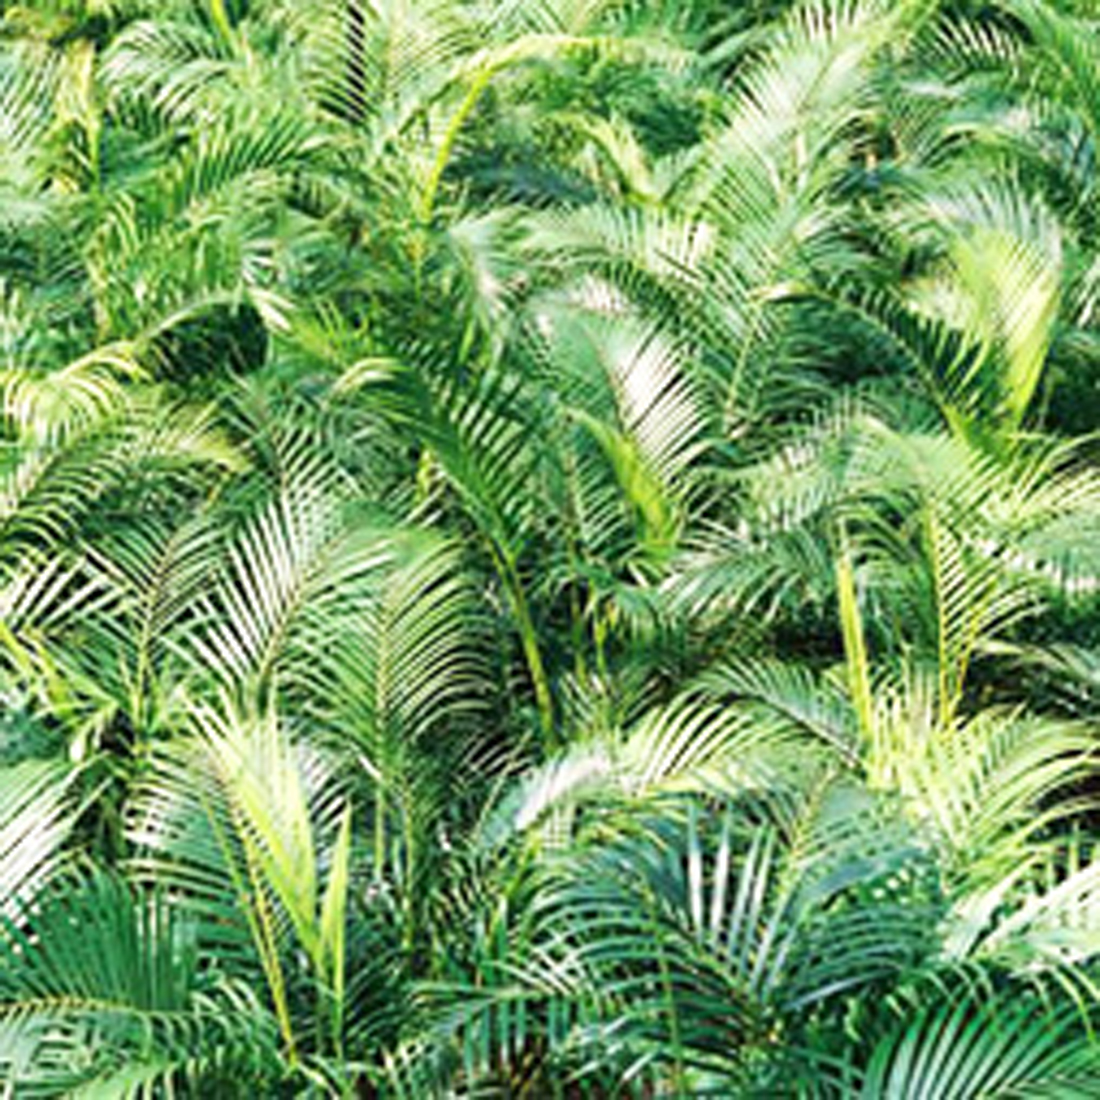 Cane Palms (Chrysalidocarpus Lutescens)